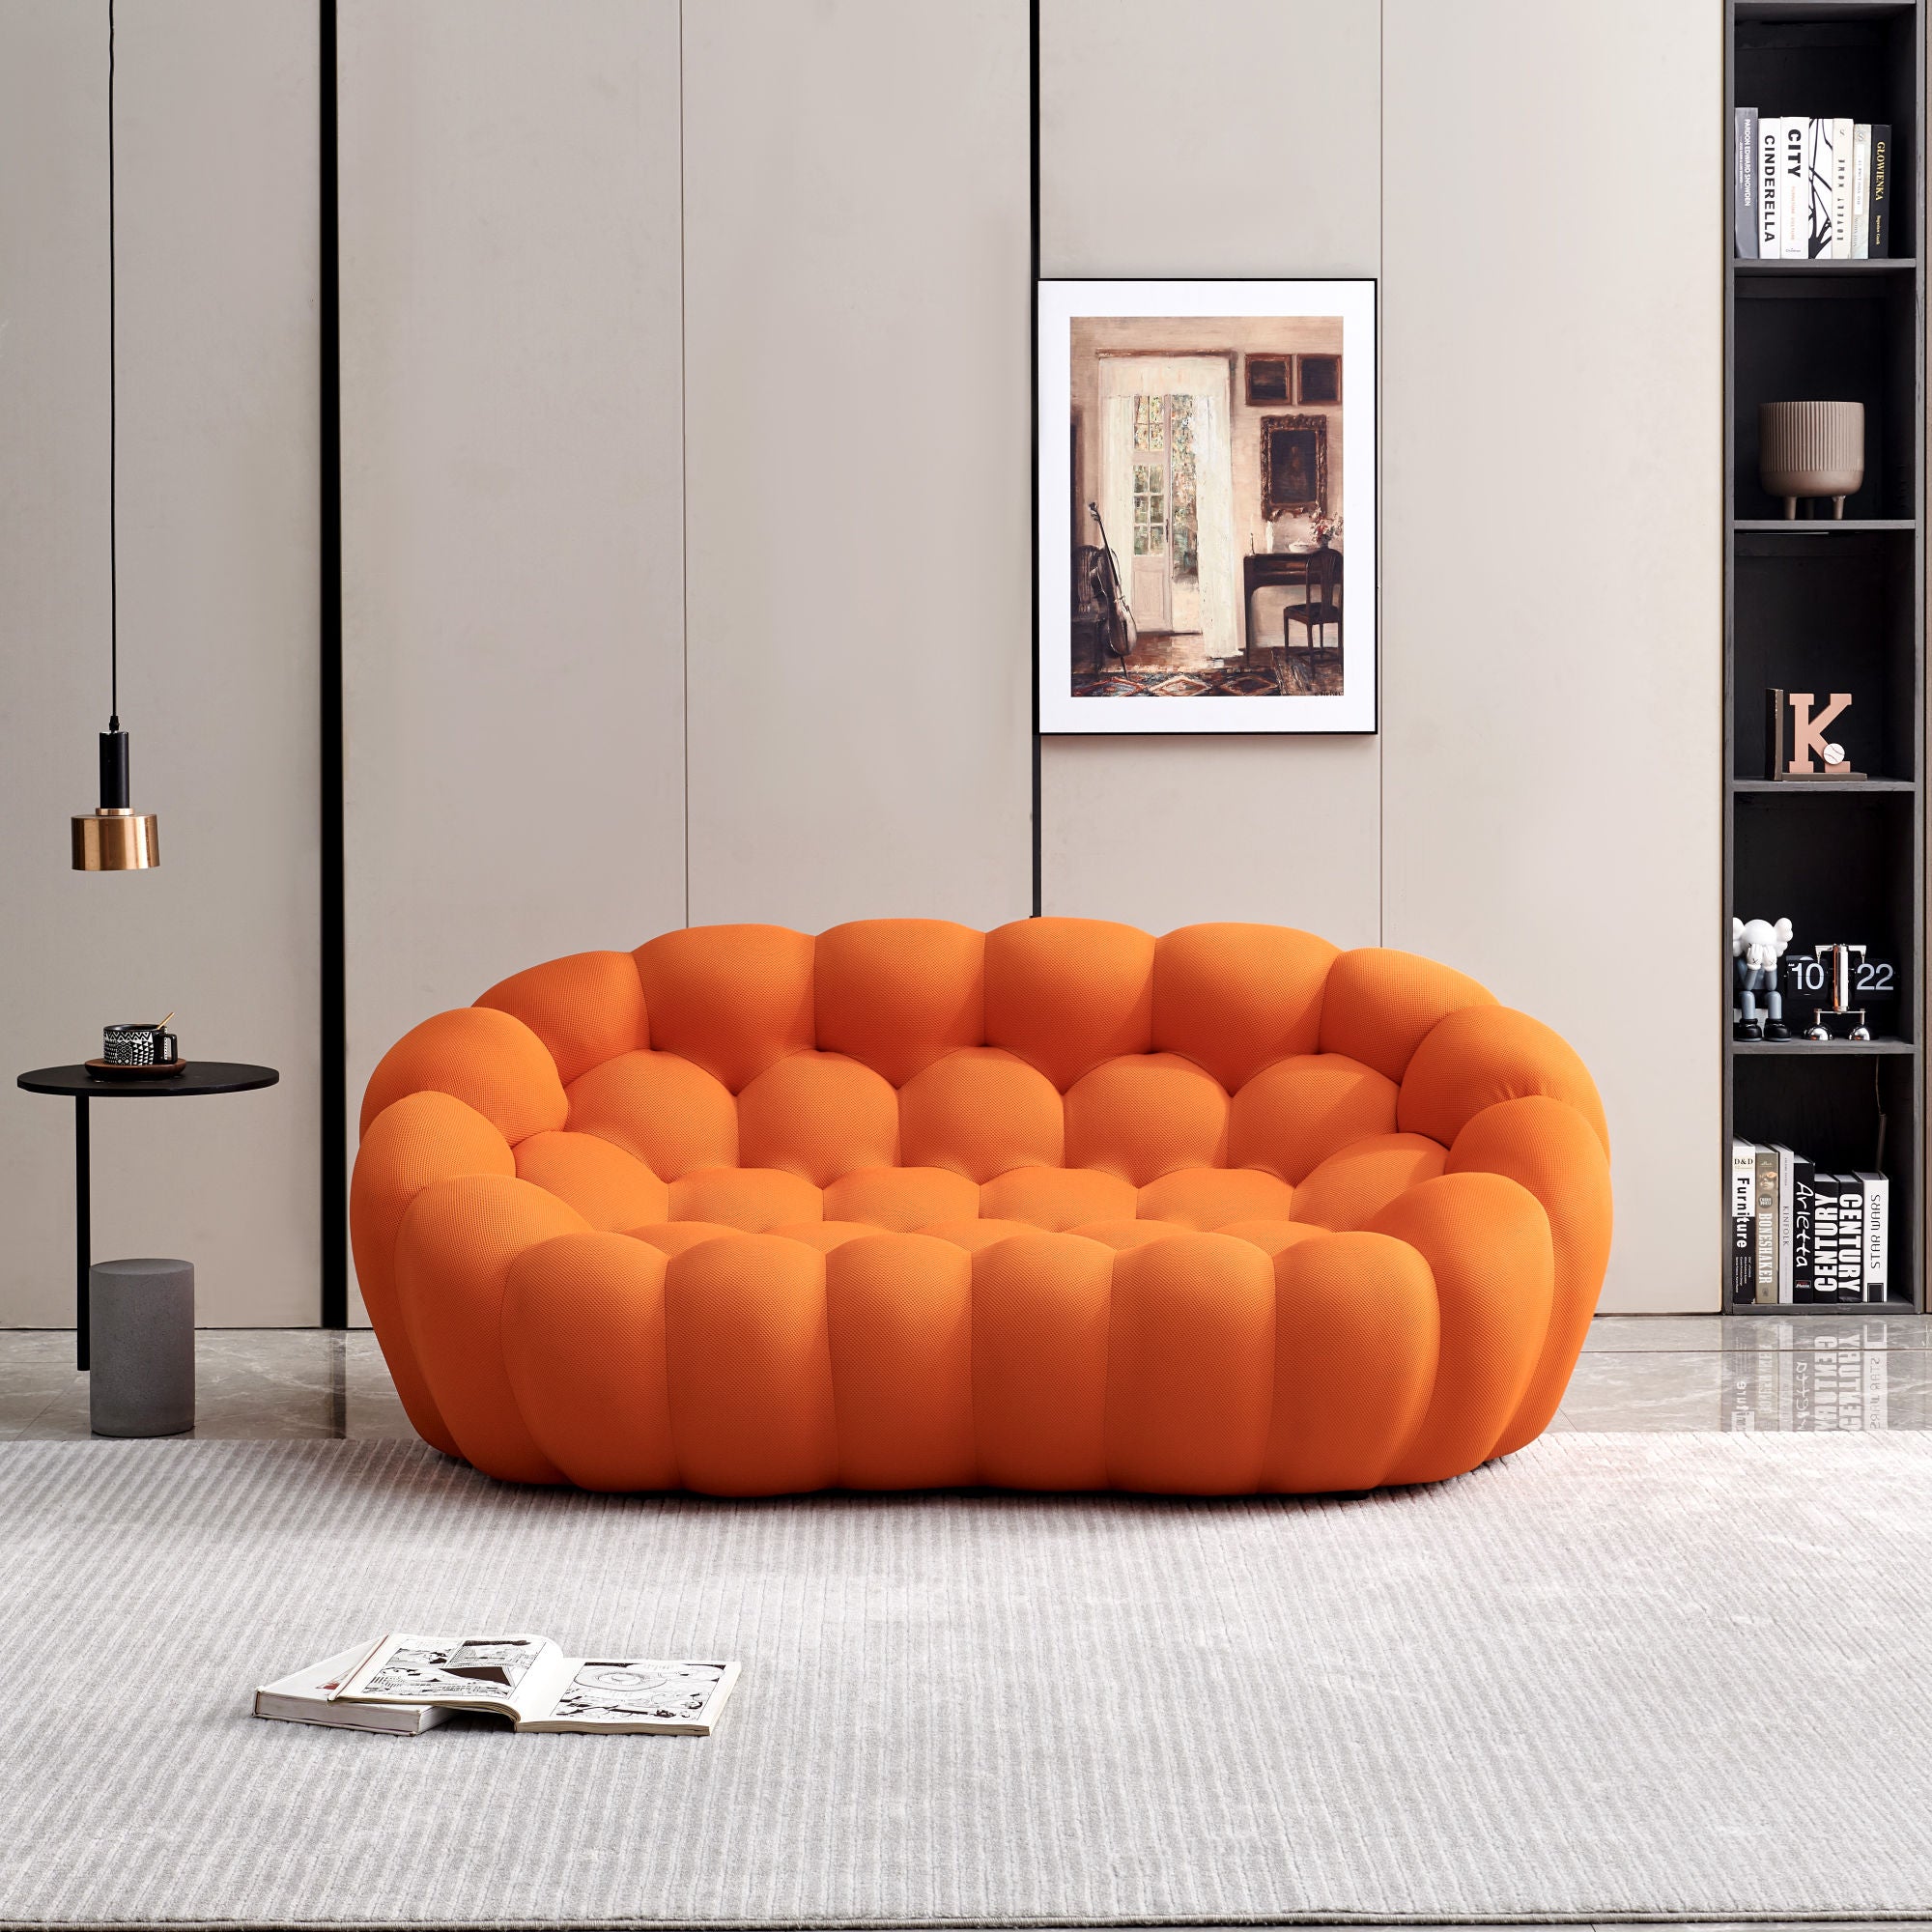 The Bubble Sofa